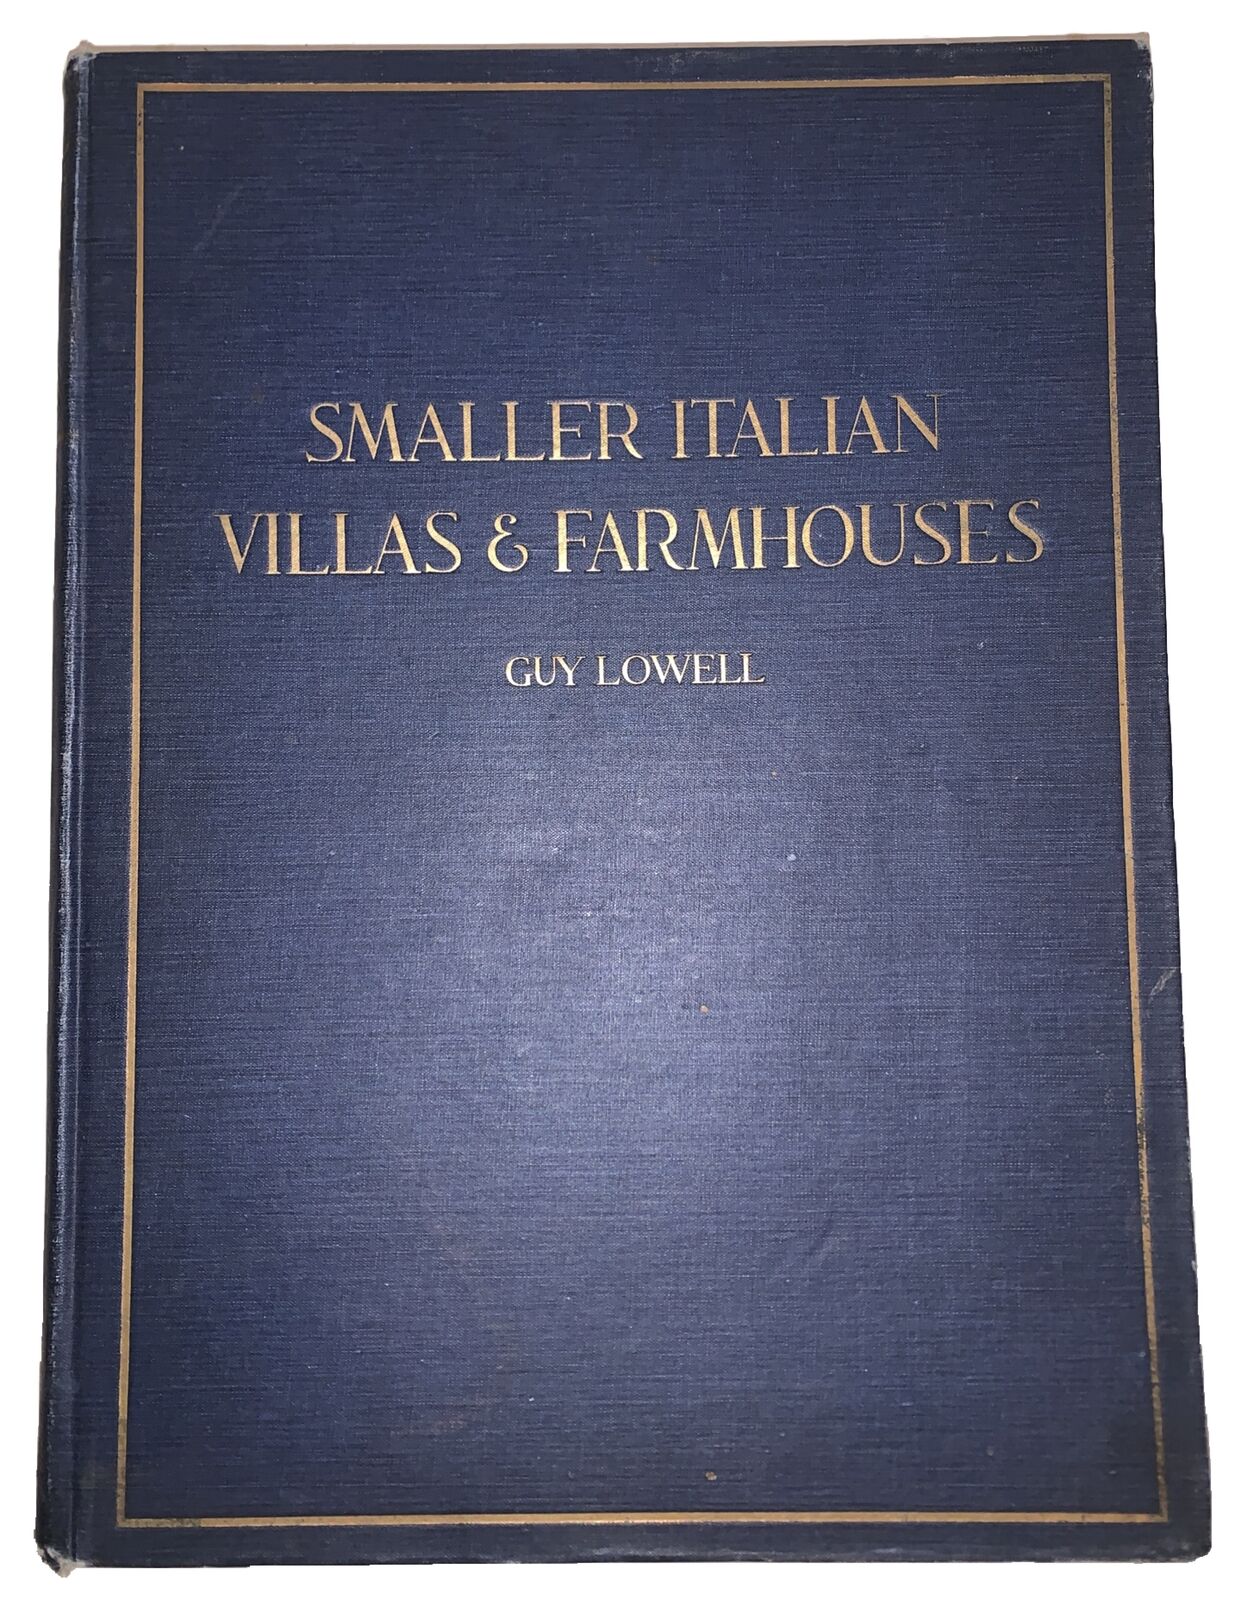 1916, 1st Ed, SMALLER ITALIAN VILLAS & FARMHOUSES, by GUY LOWELL, ARCHITECTURE